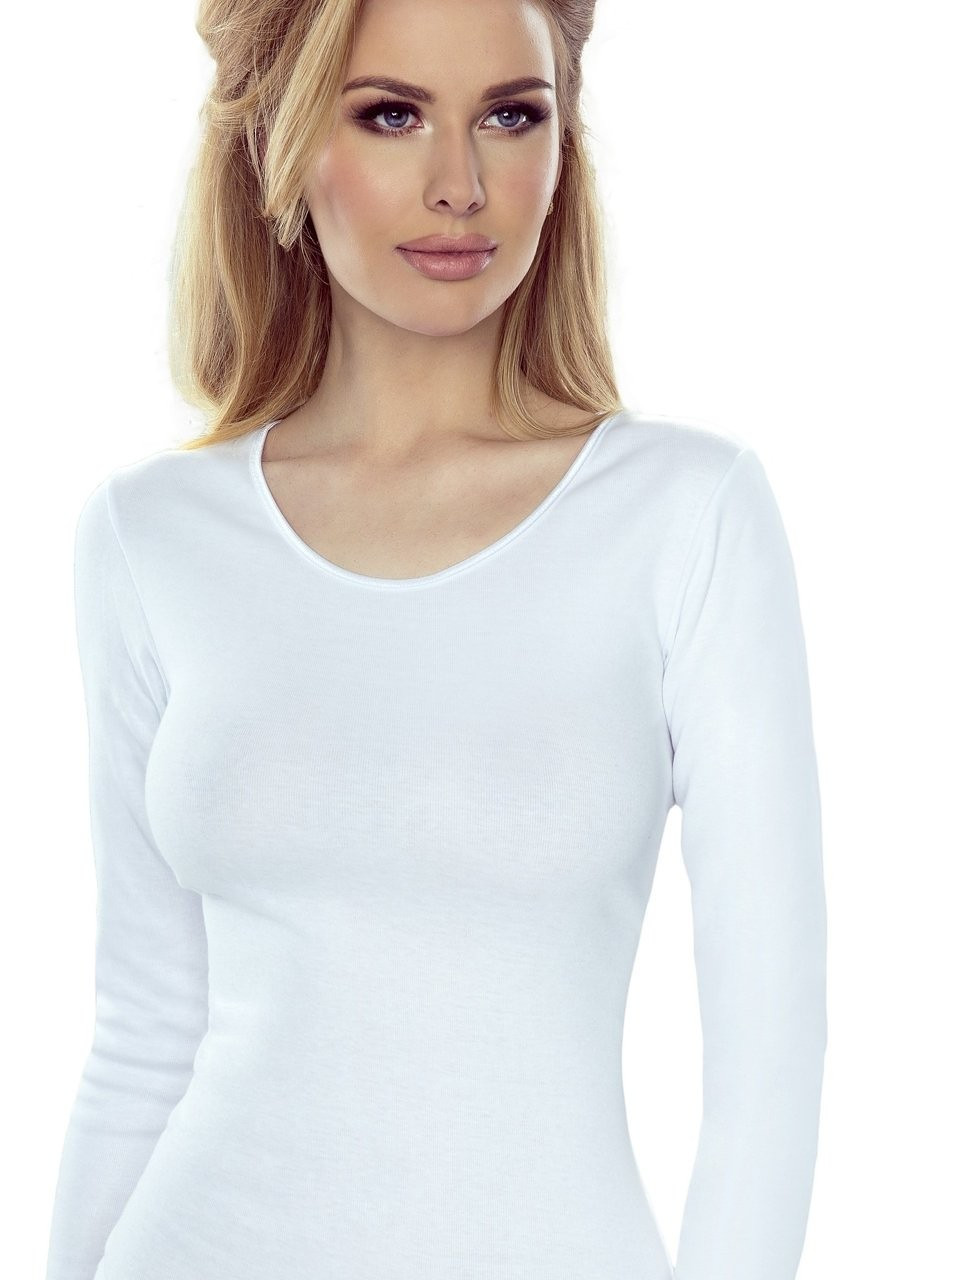 Dámská košilka Eldar Irene Bílá S-XL Barva: bílá, Velikost: XL